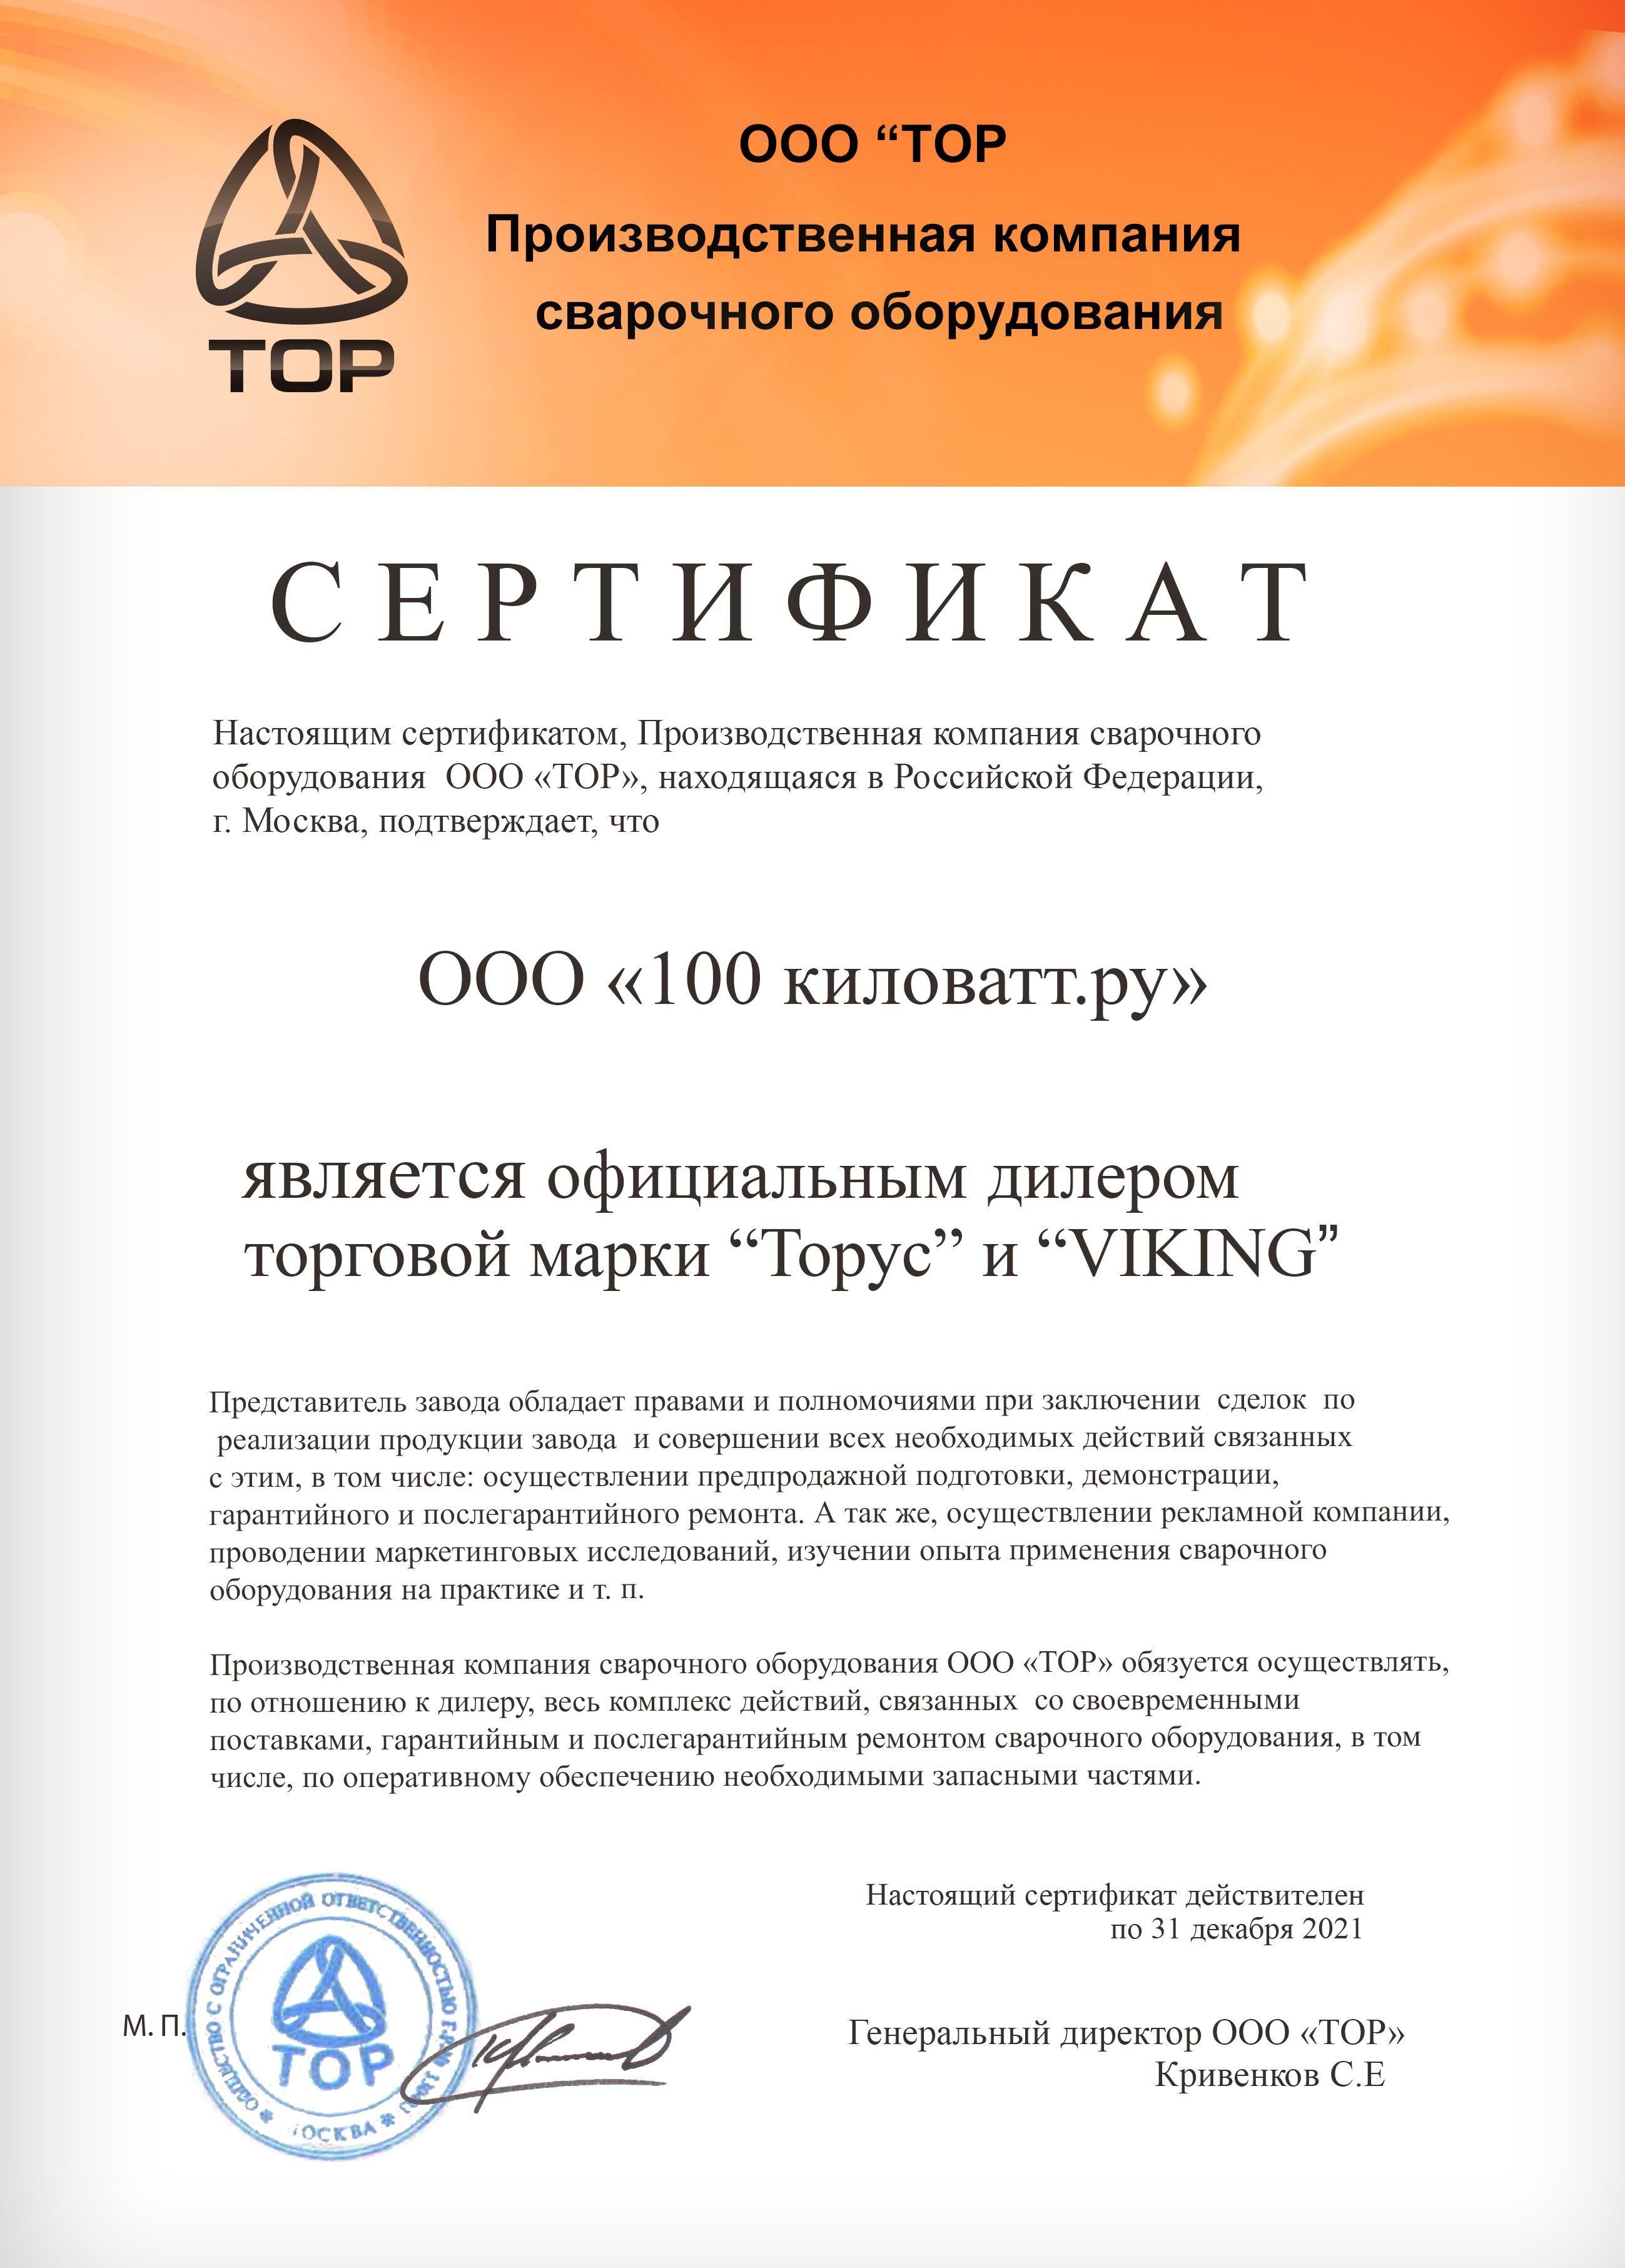 ТОРУС, VIKING - Сертификат дилера